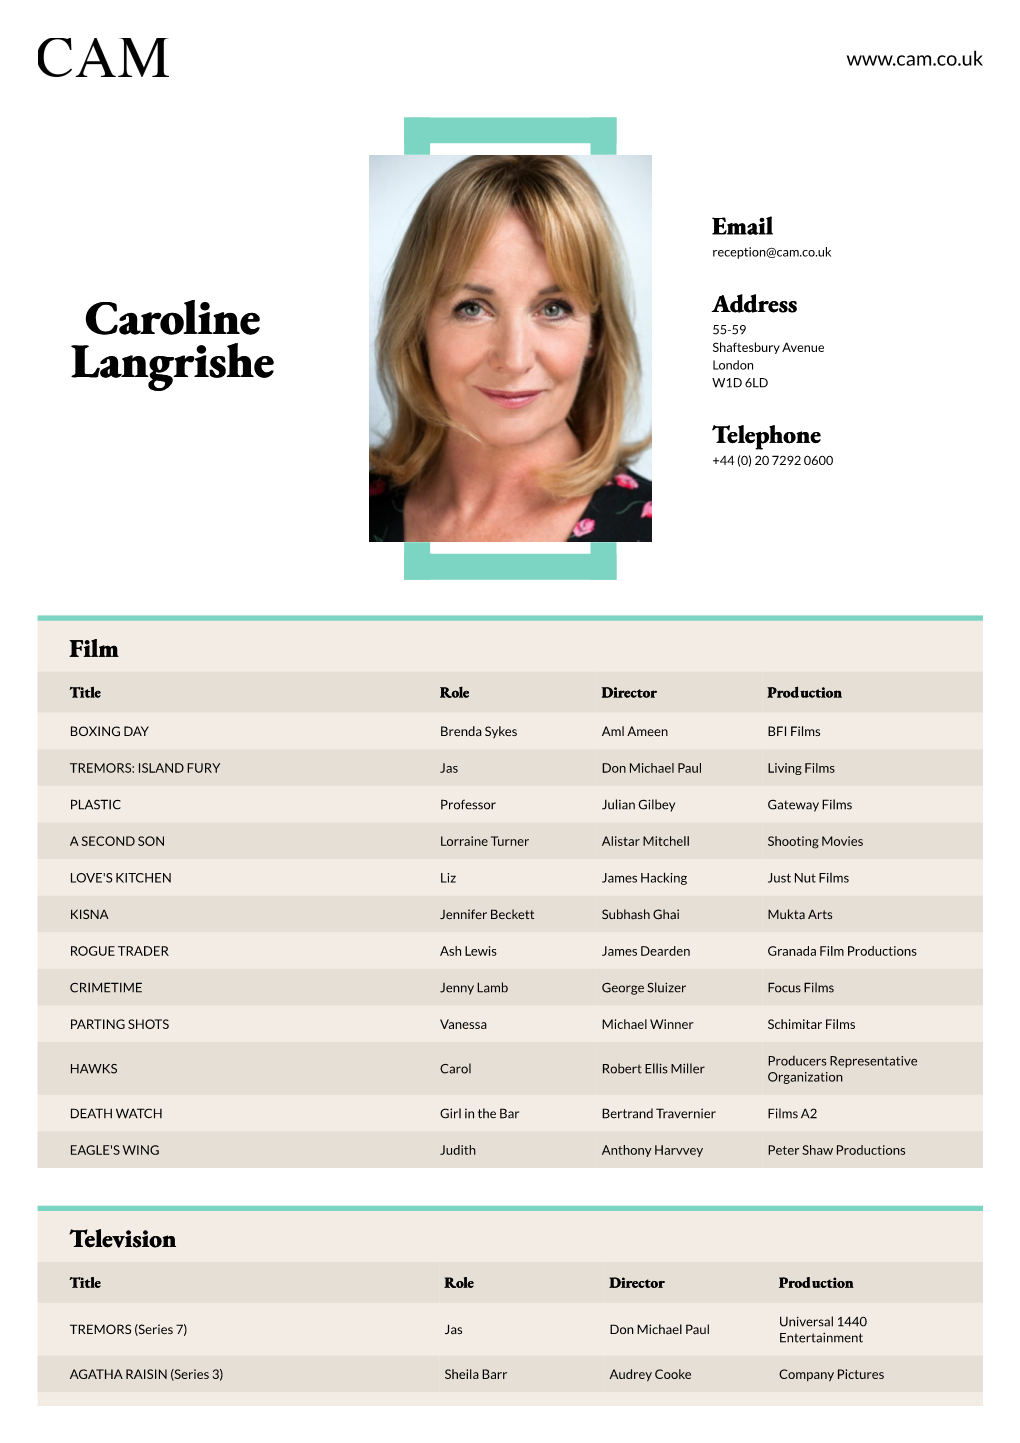 Caroline Langrishe